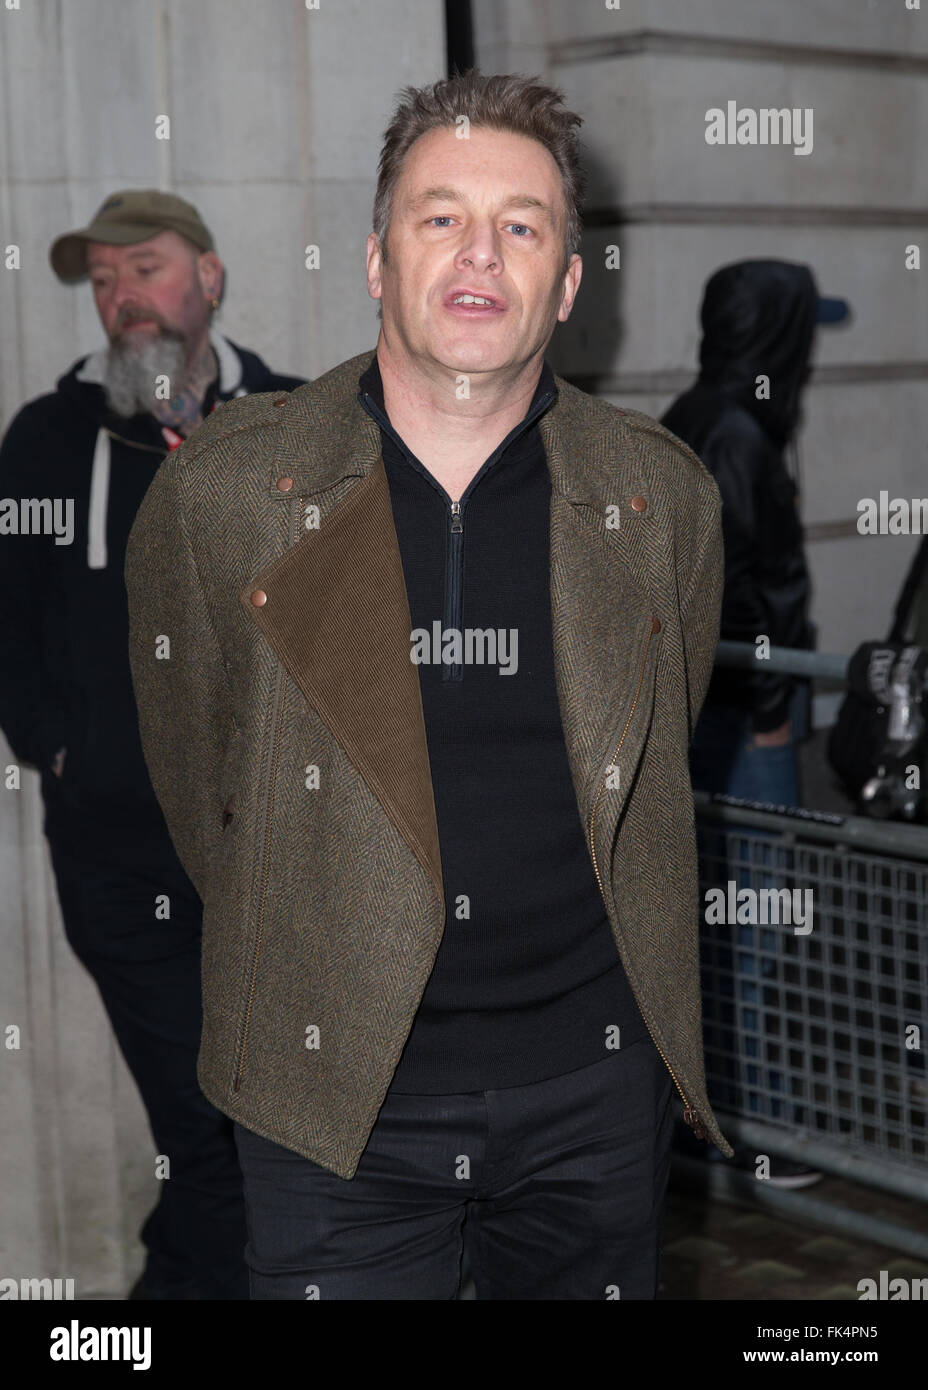 Chris Packham arriving at the Radio 2 studios  Featuring: Chris Packham Where: London, United Kingdom When: 05 Feb 2016 Stock Photo